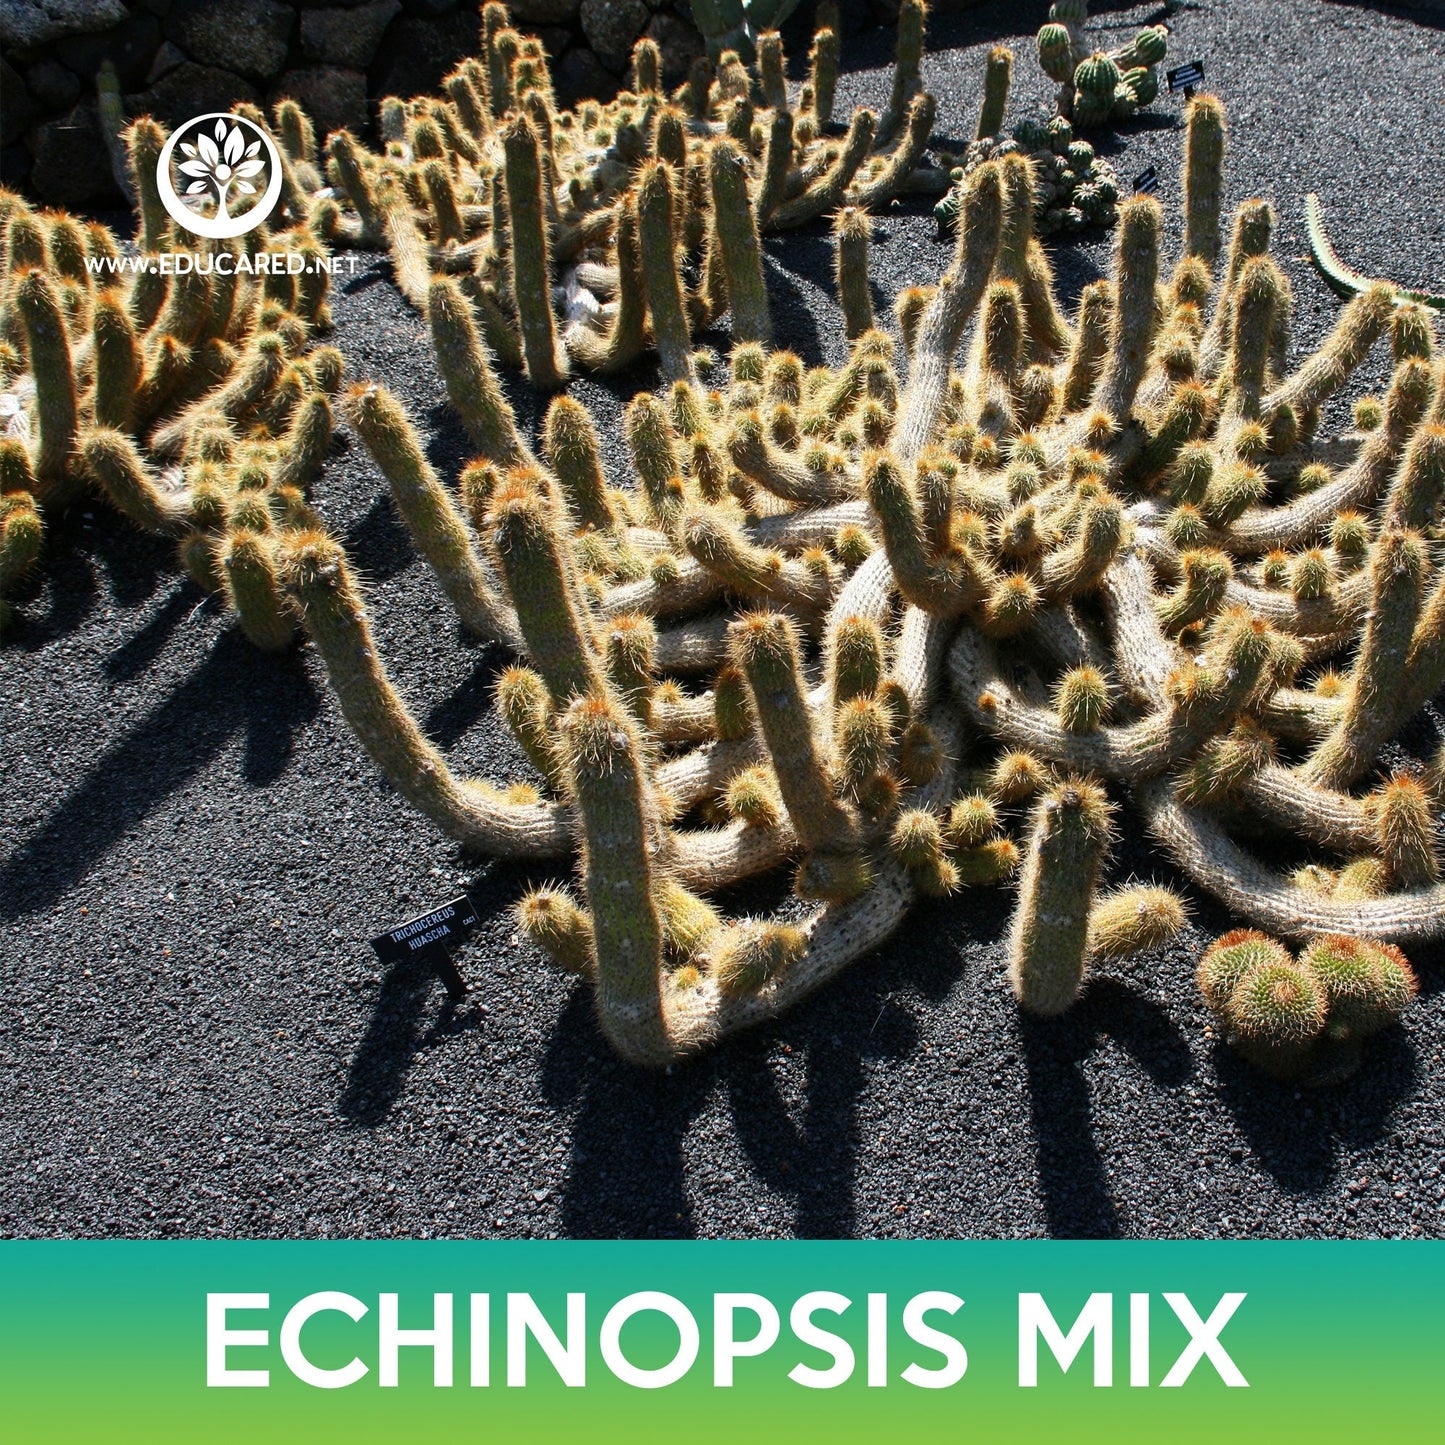 Echinopsis Cactus Mix Seeds